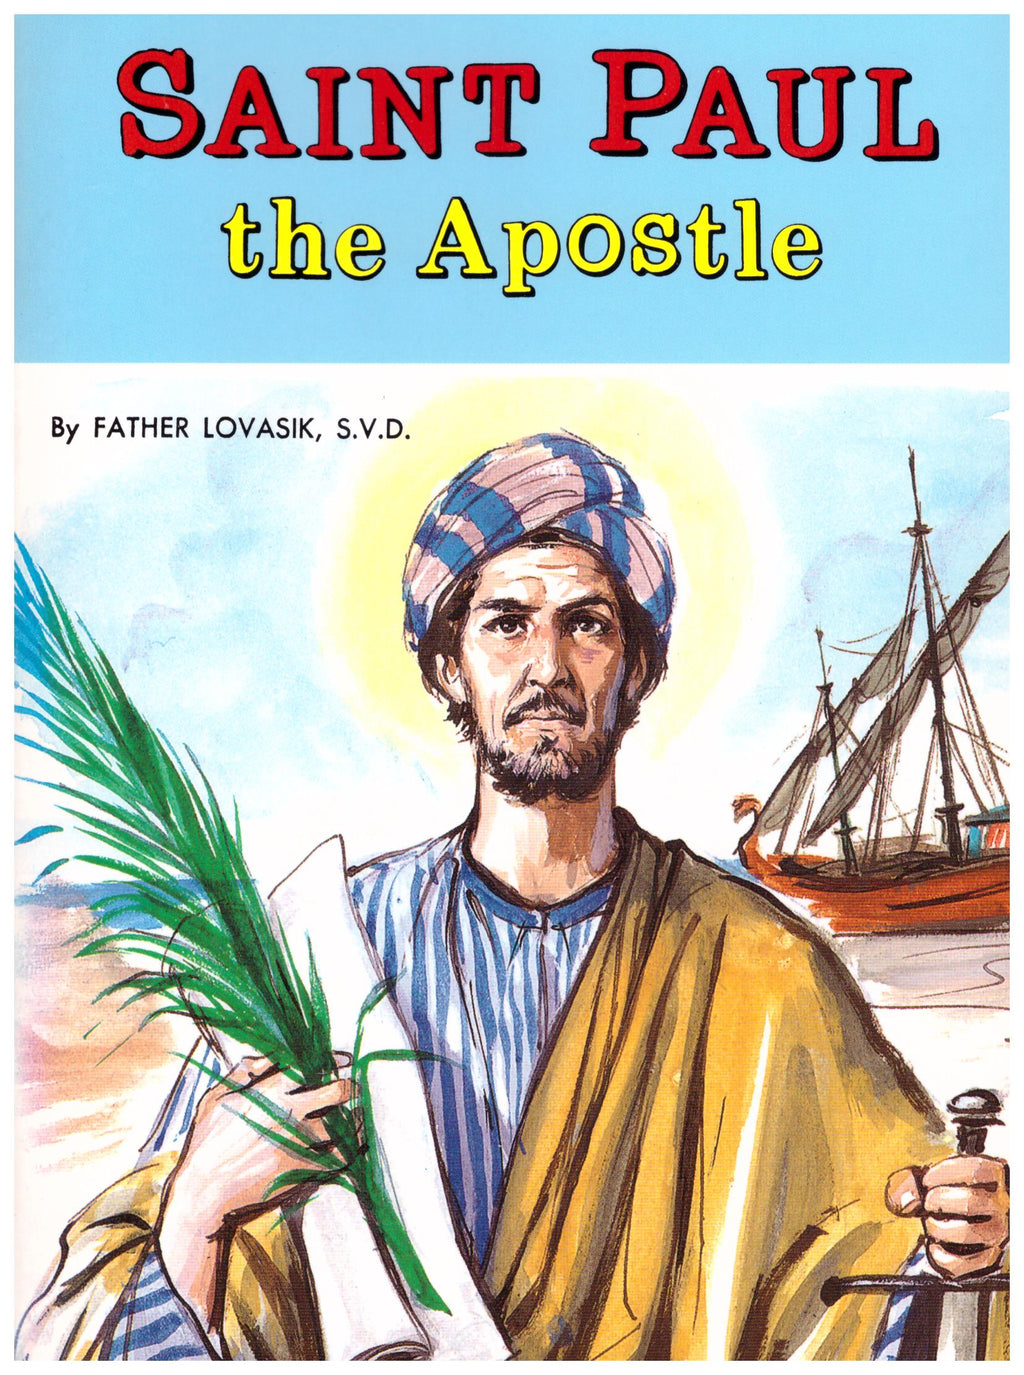 ST PAUL THE APOSTLE